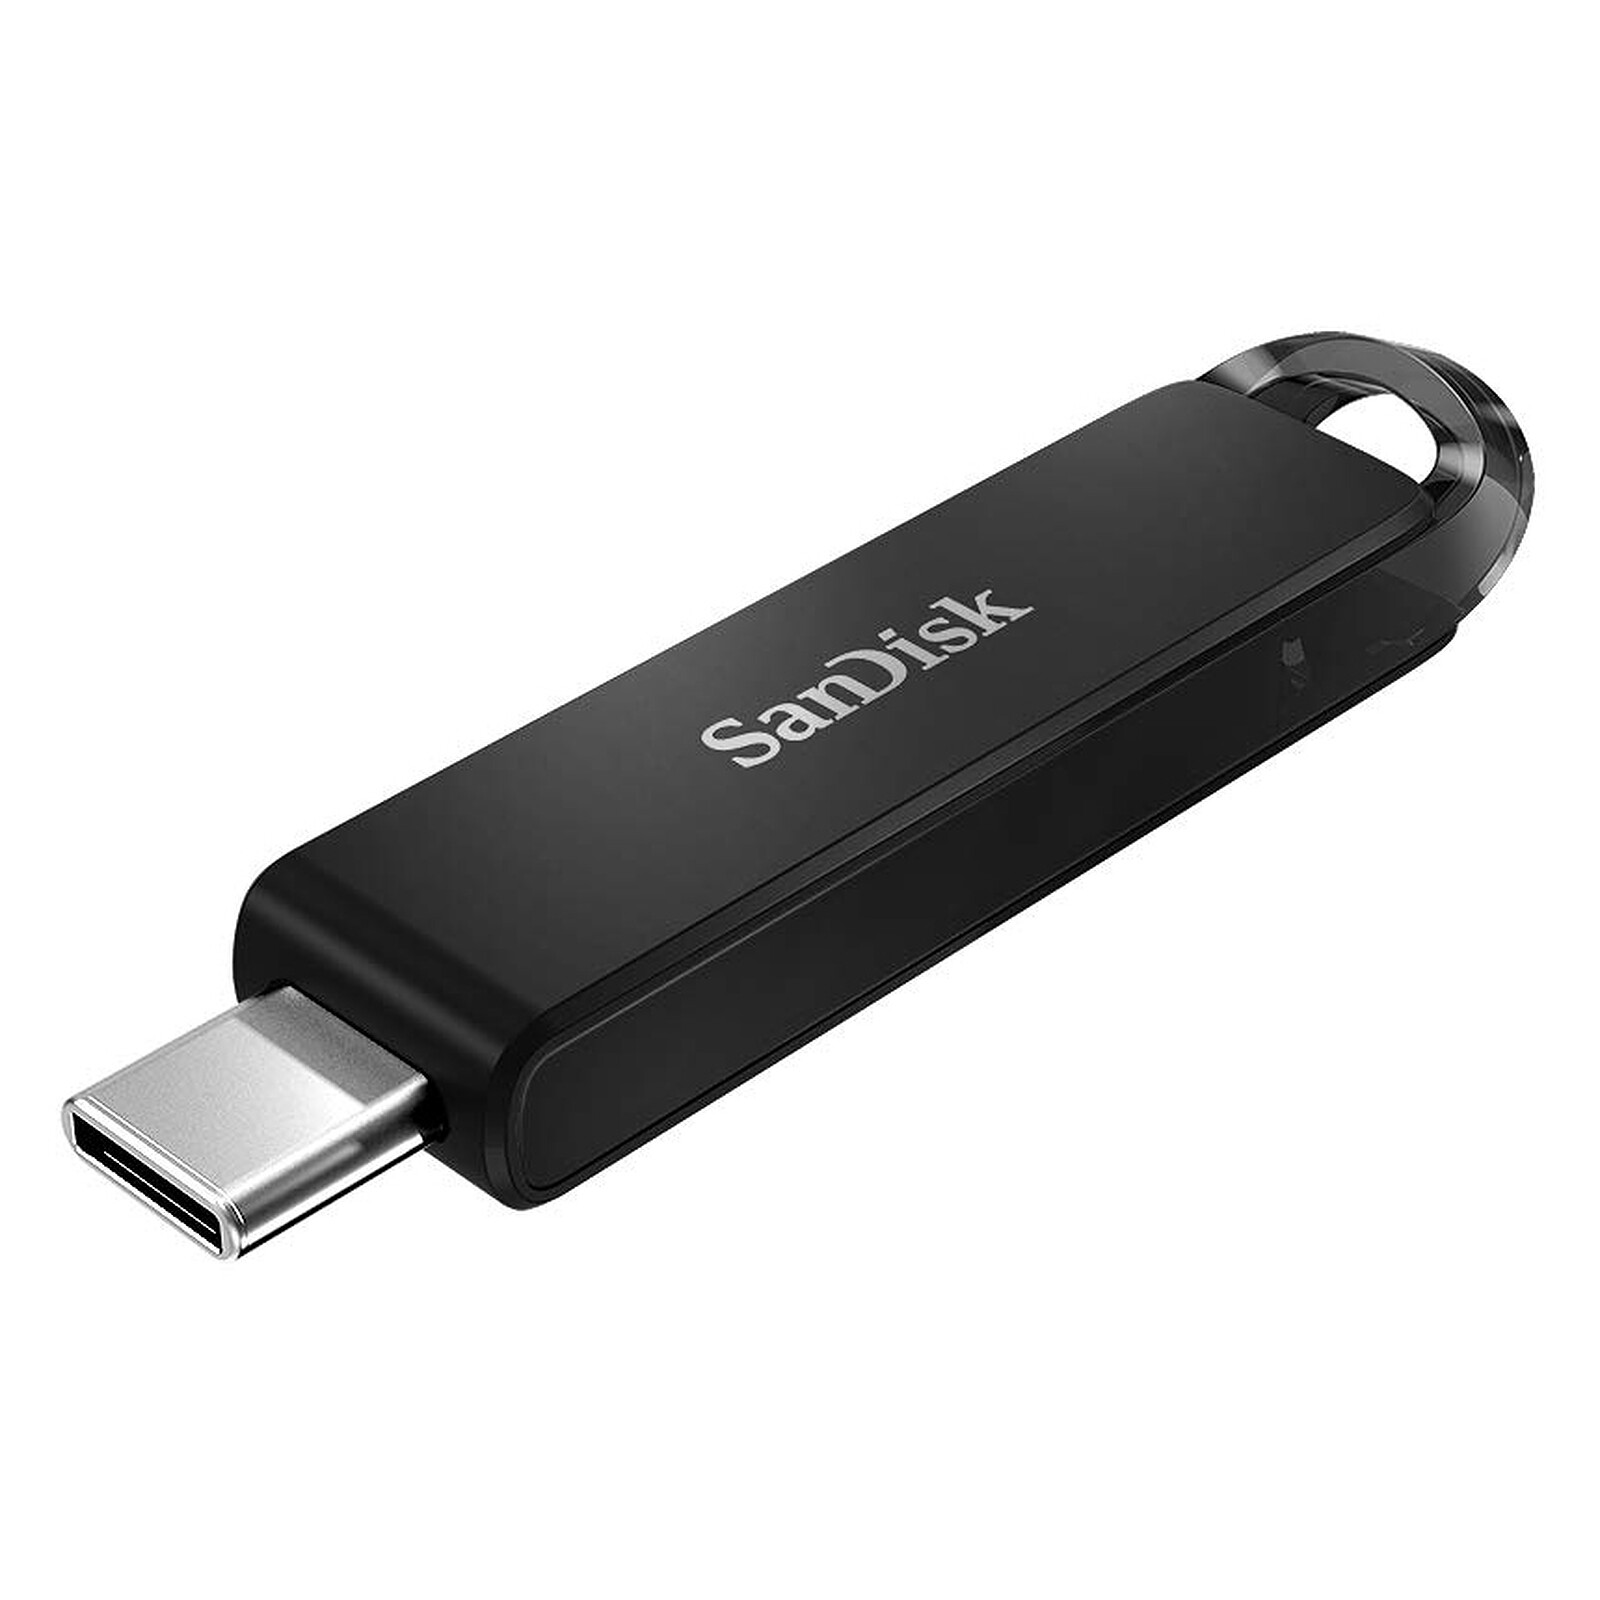 Samsung - CLE USB SAMSUNG 256G USB 3.1 FIT PLUS - VITESSE LECTURE